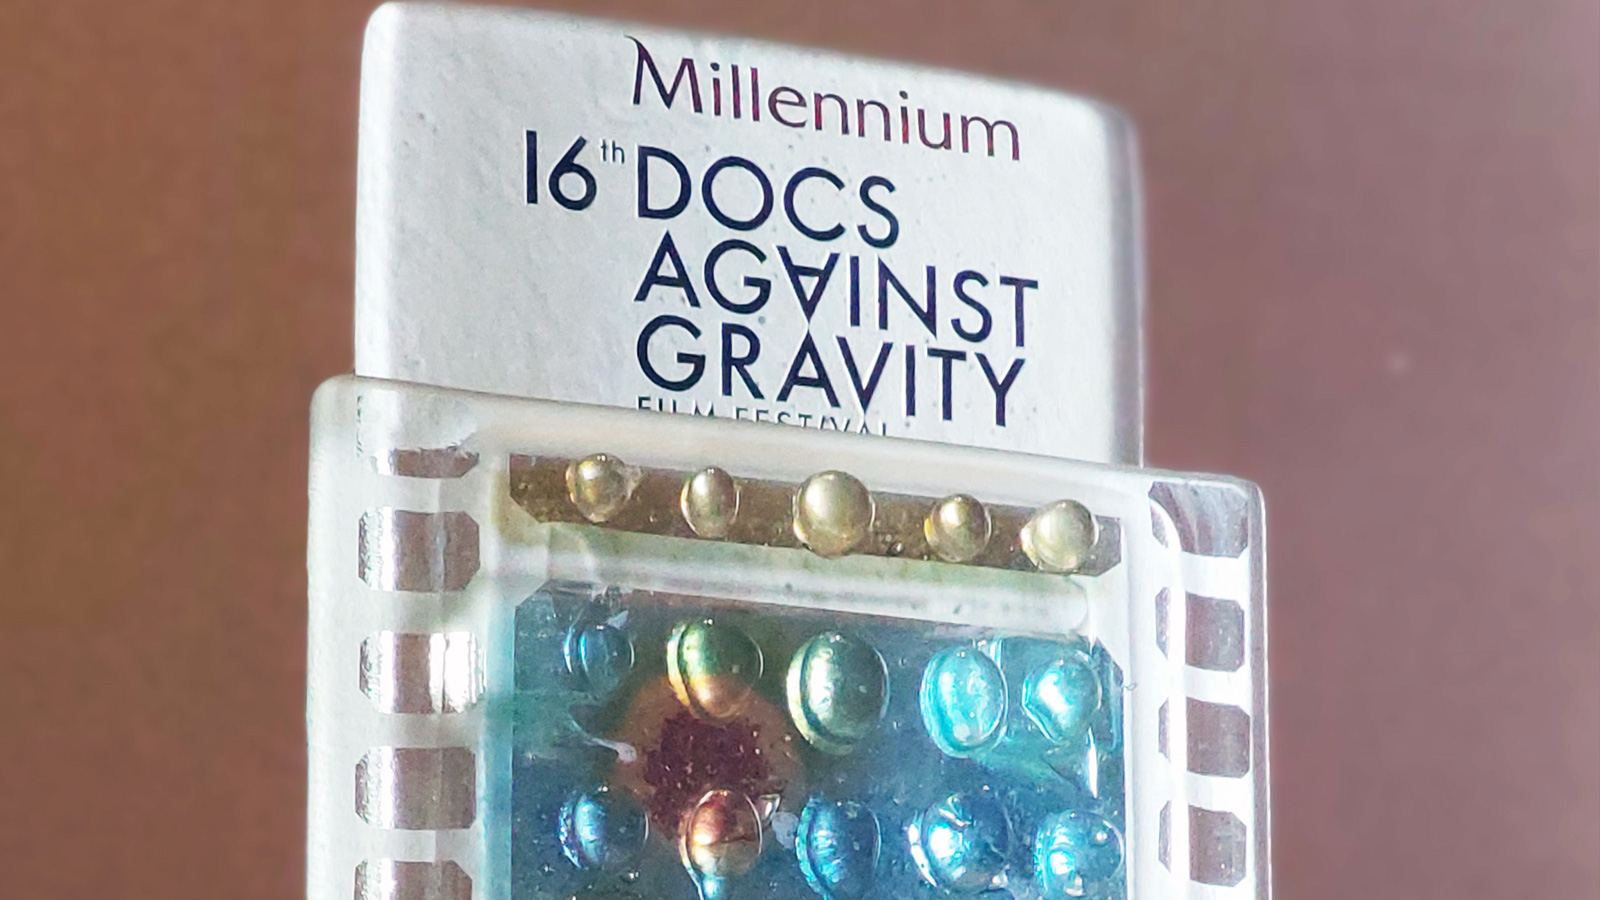 Millenium-docs-against-gravity-festival-poland